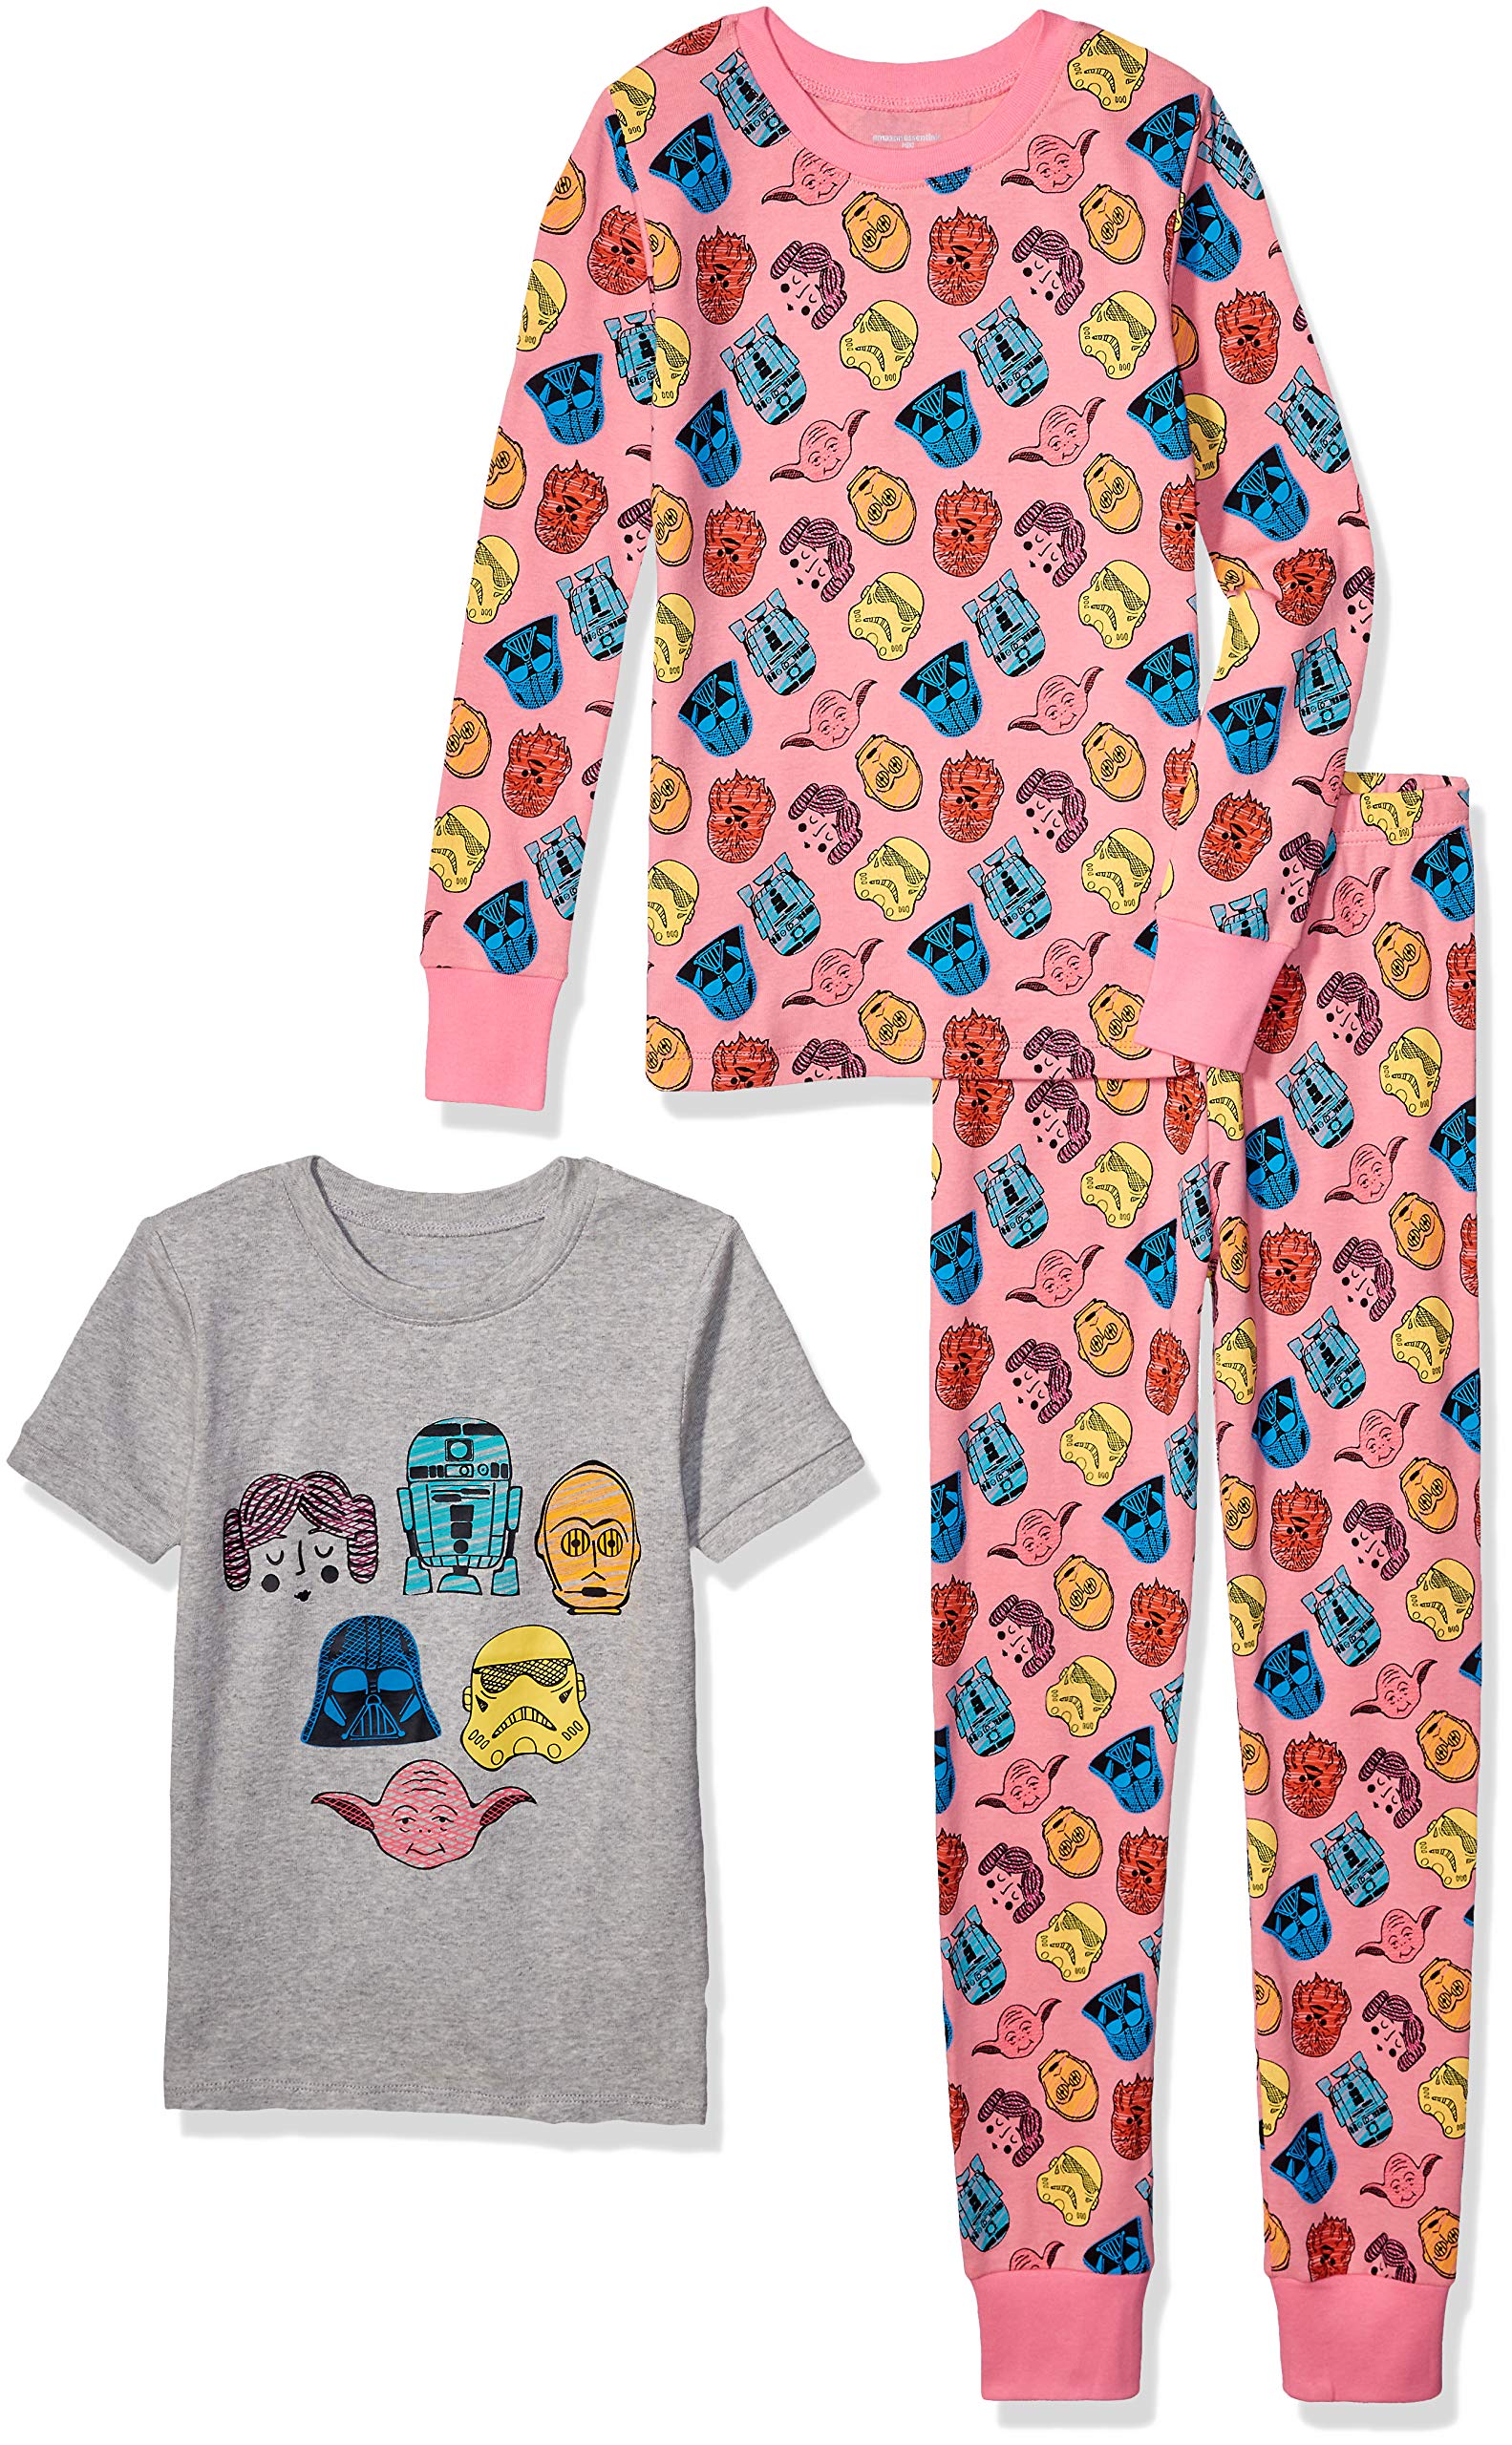 Amazon Essentials  Essentials Disney  Marvel Frozen  Princess Girls Snug-Fit Cotton Pajama Sleepwear Sets (Previously Spotted Zebra), Pinkgr